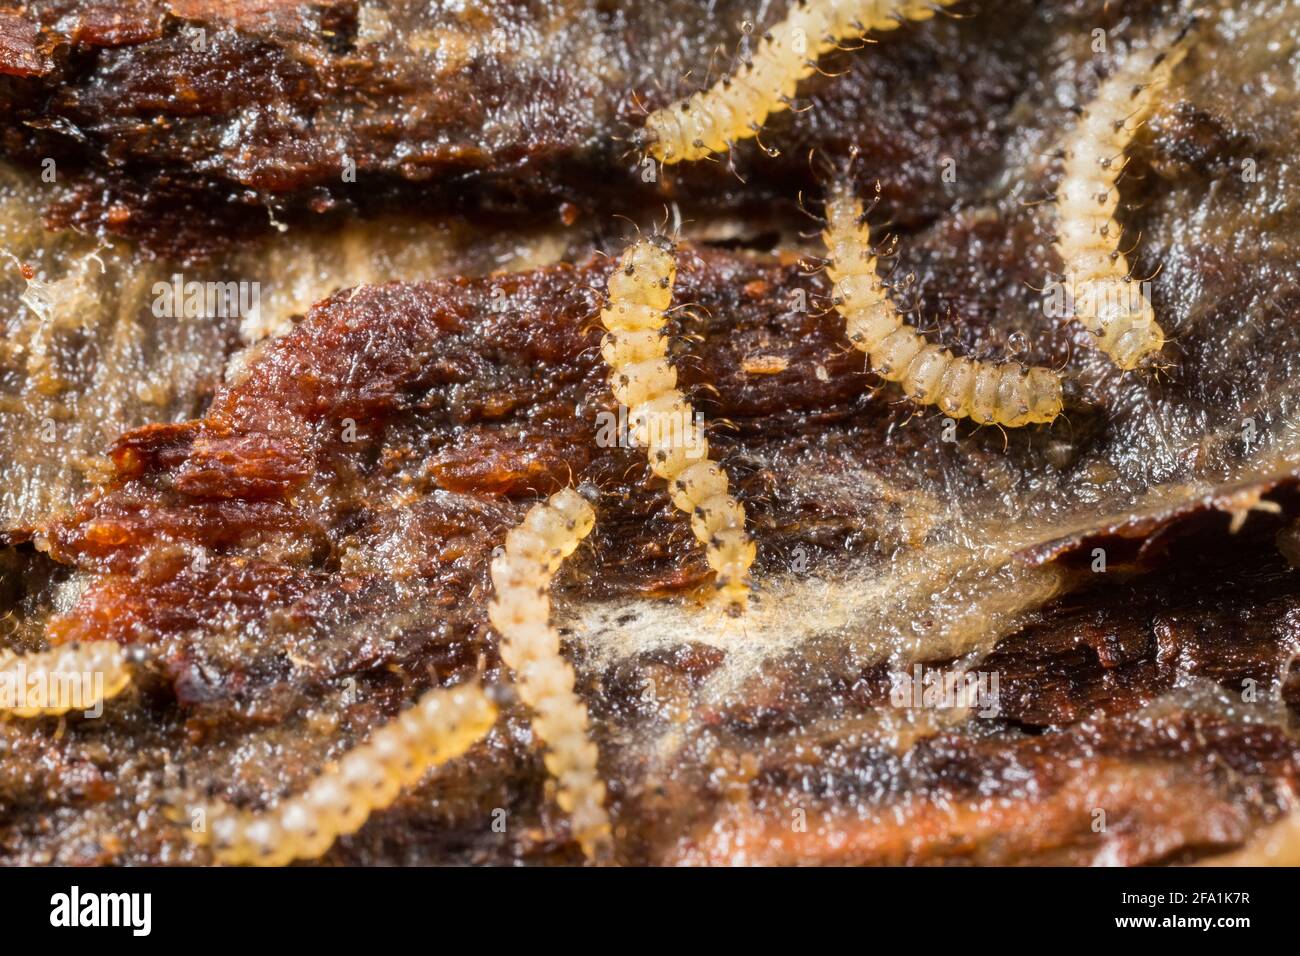 Biting midge larva (Forcipomyia sp) under a rotten log Stock Photo